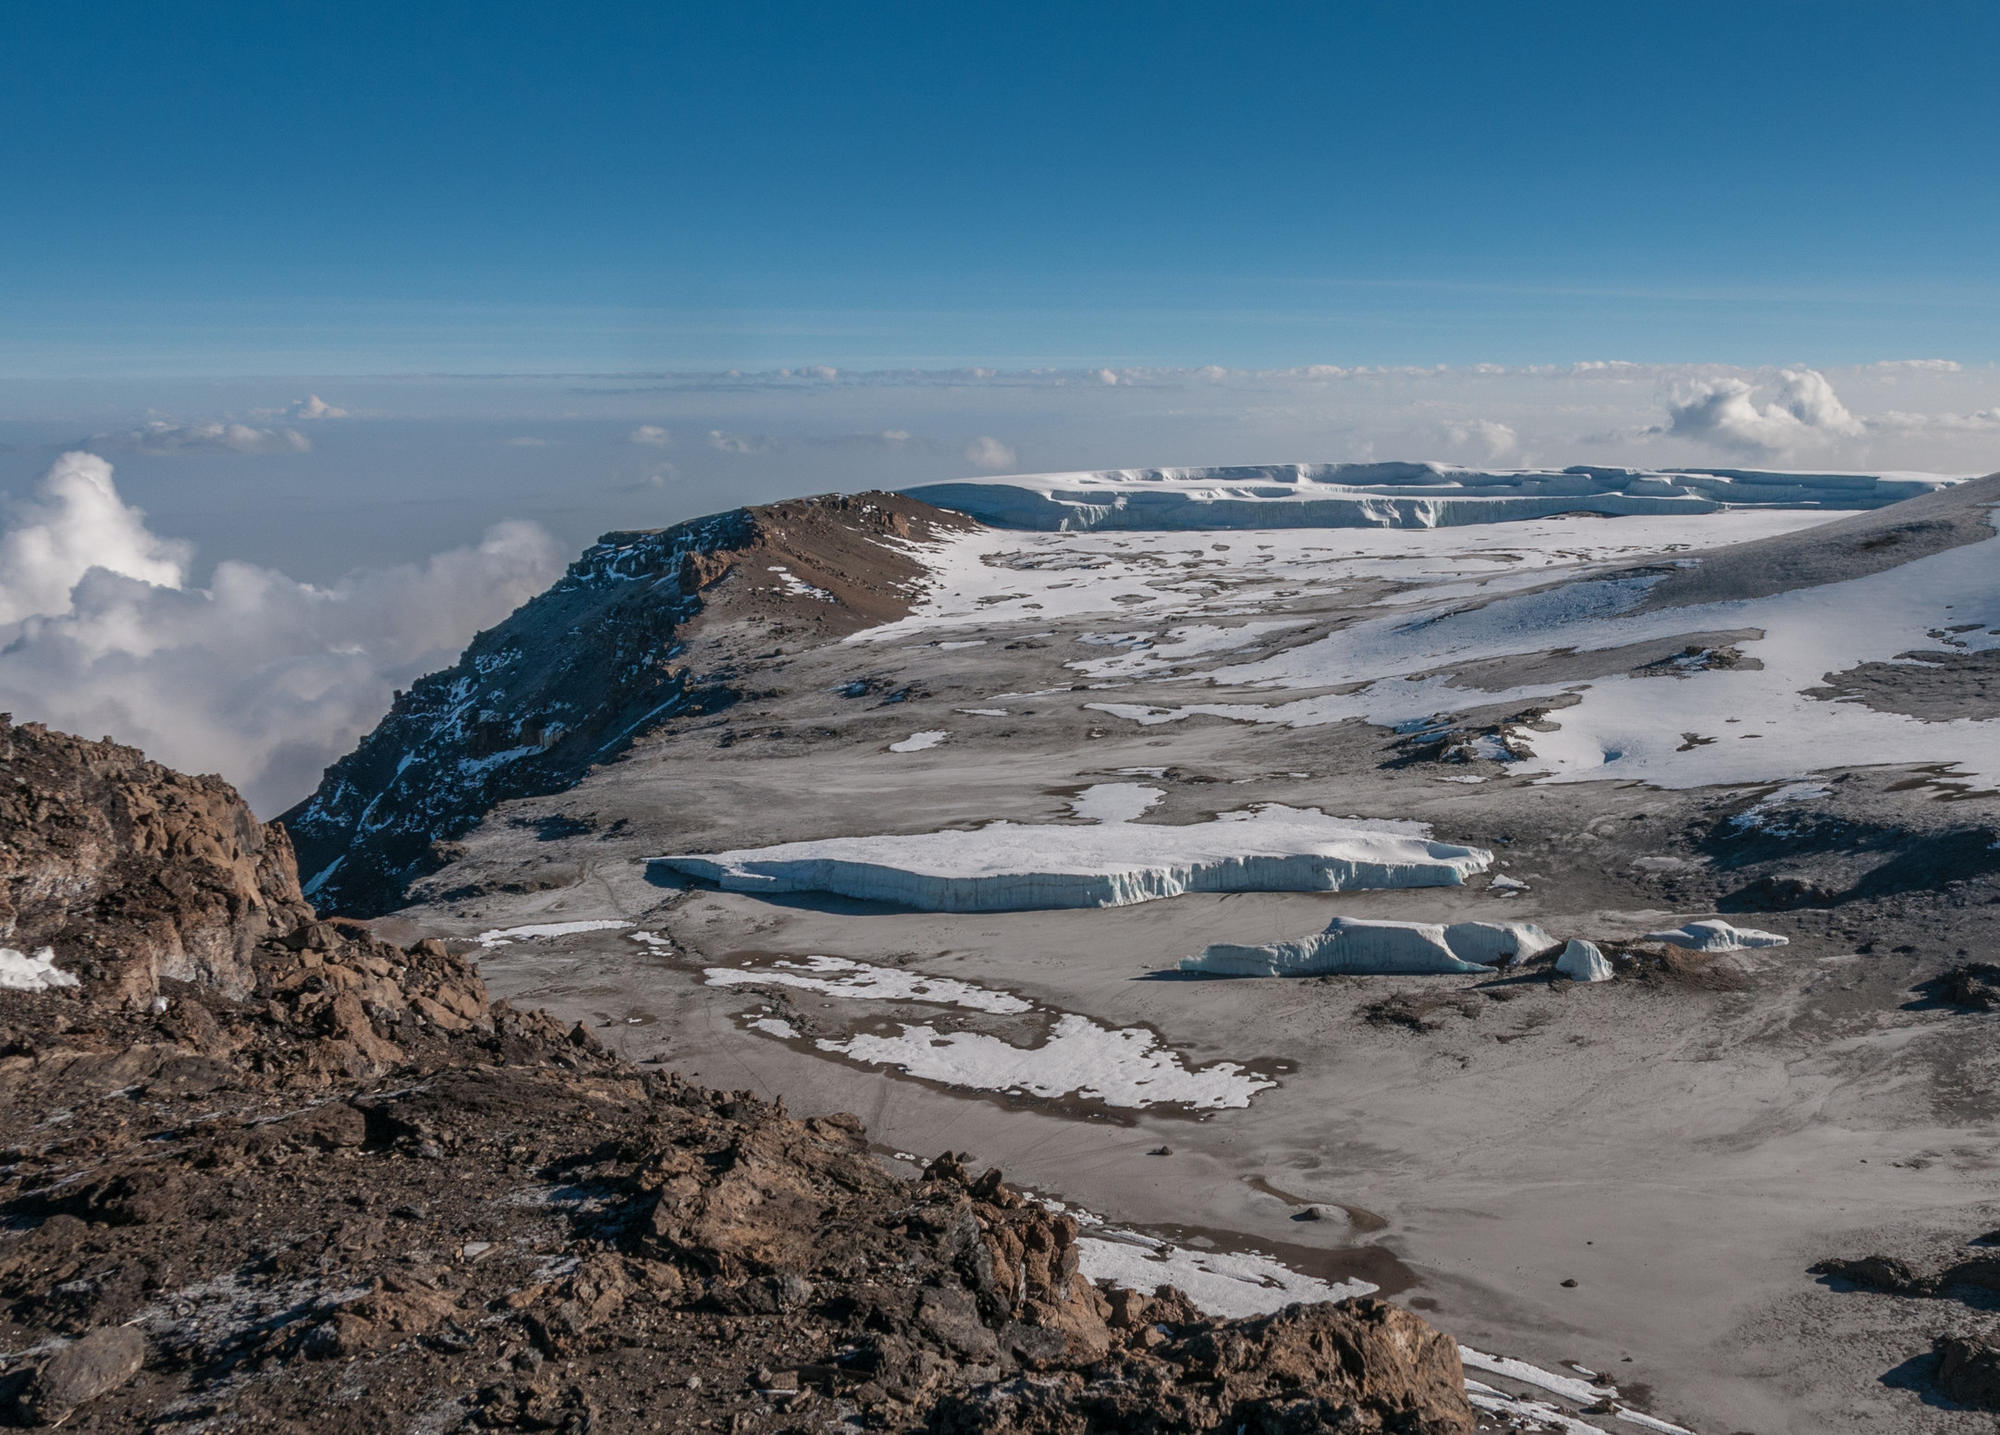 Har du hørt om mange som har gått via krateret på Kilimanjaro? Tvilsomt.